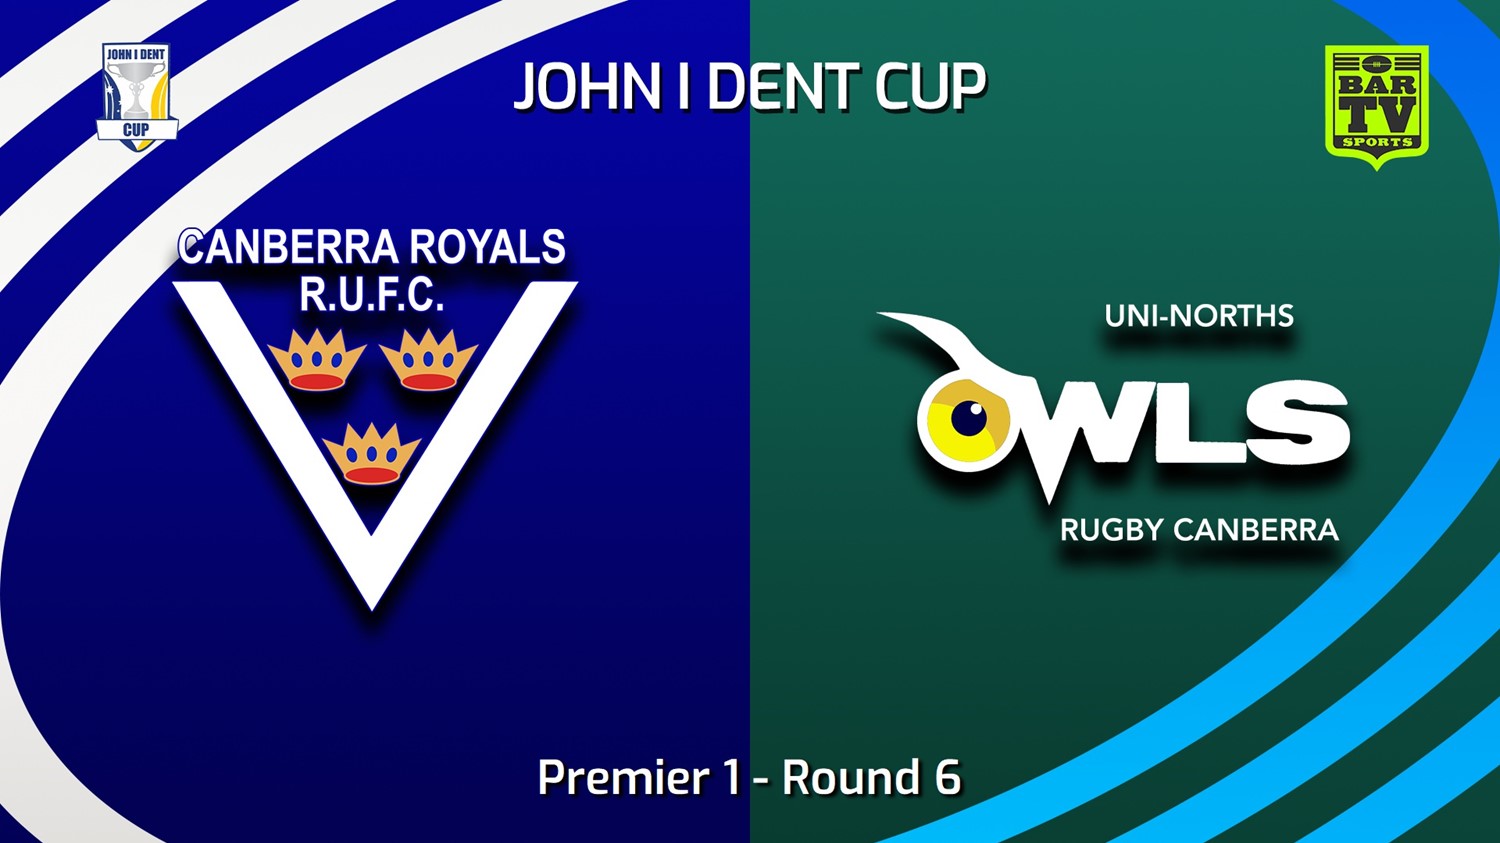 230520-John I Dent (ACT) Round 6 - Premier 1 - Canberra Royals v UNI-North Owls Minigame Slate Image